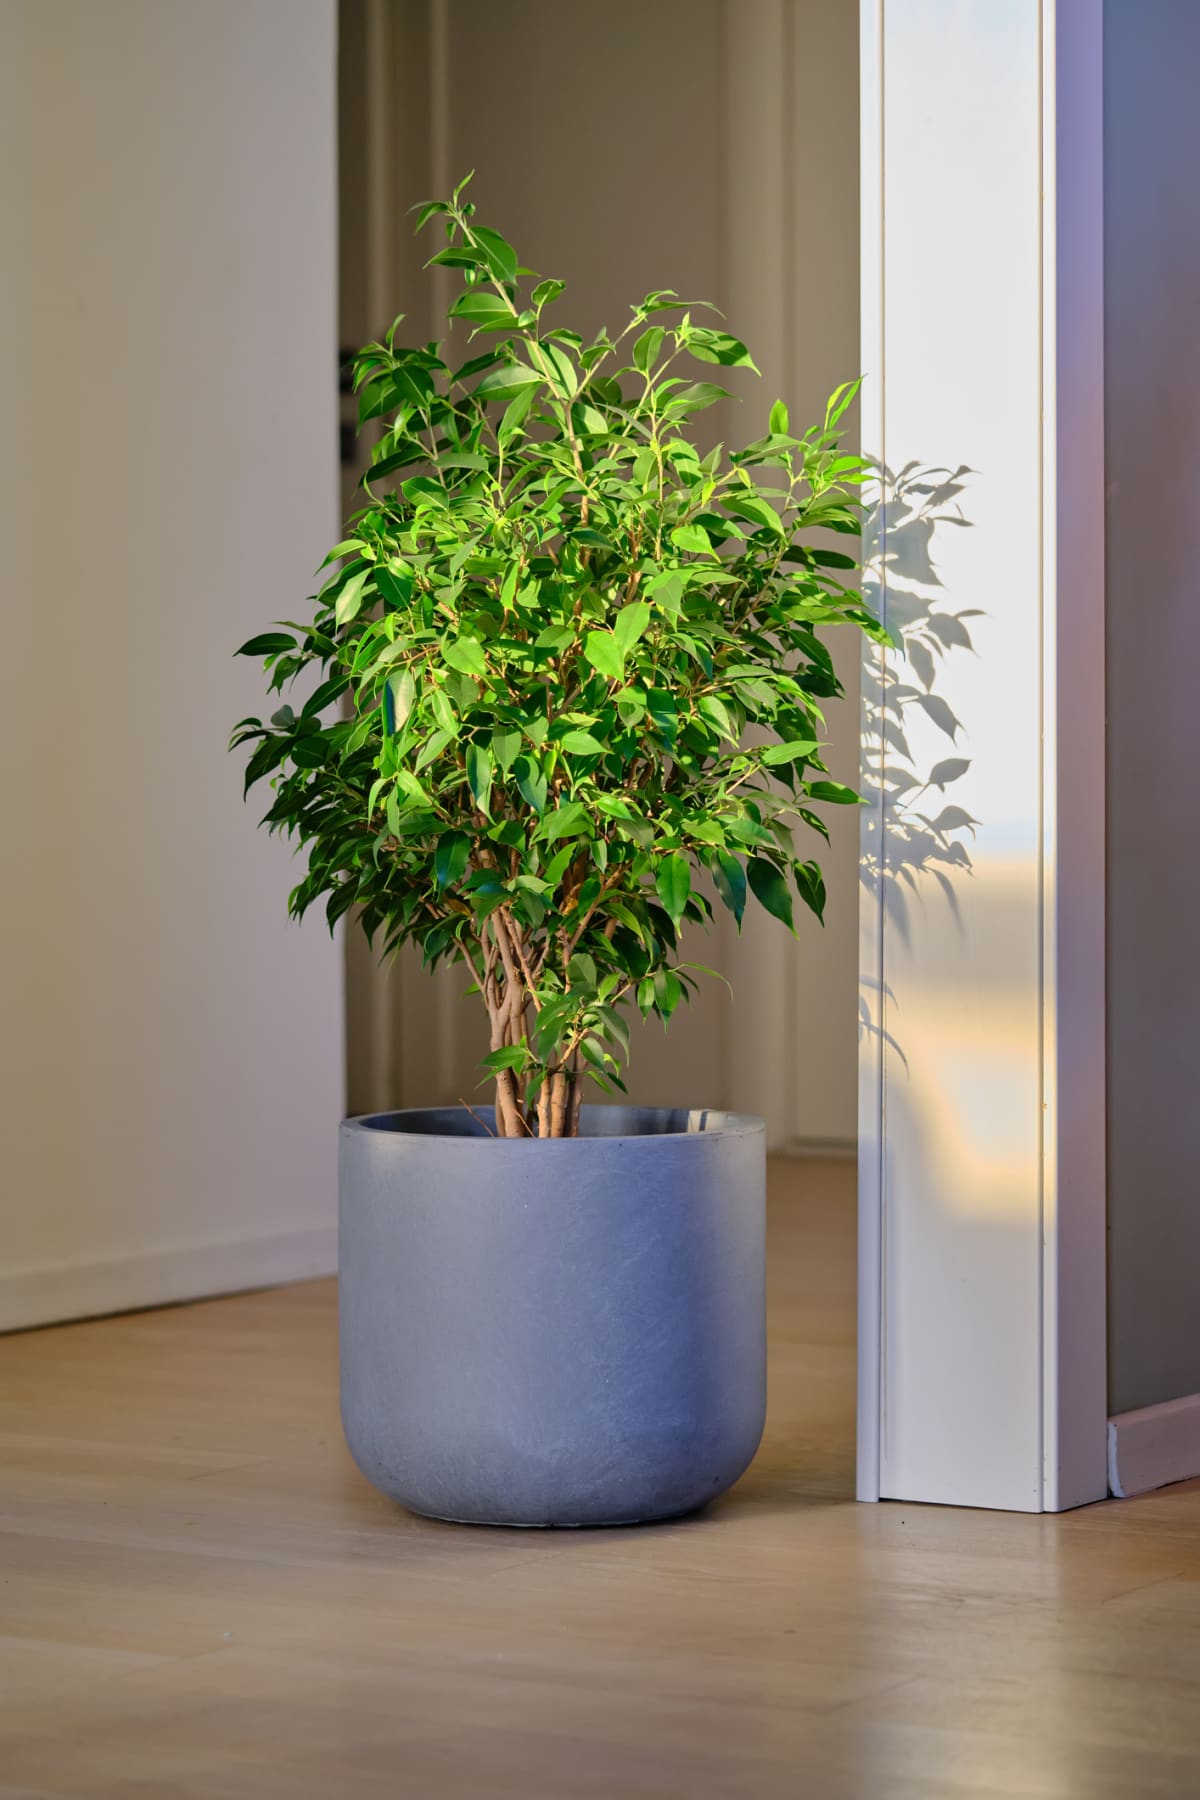 A gray planter containing a plant